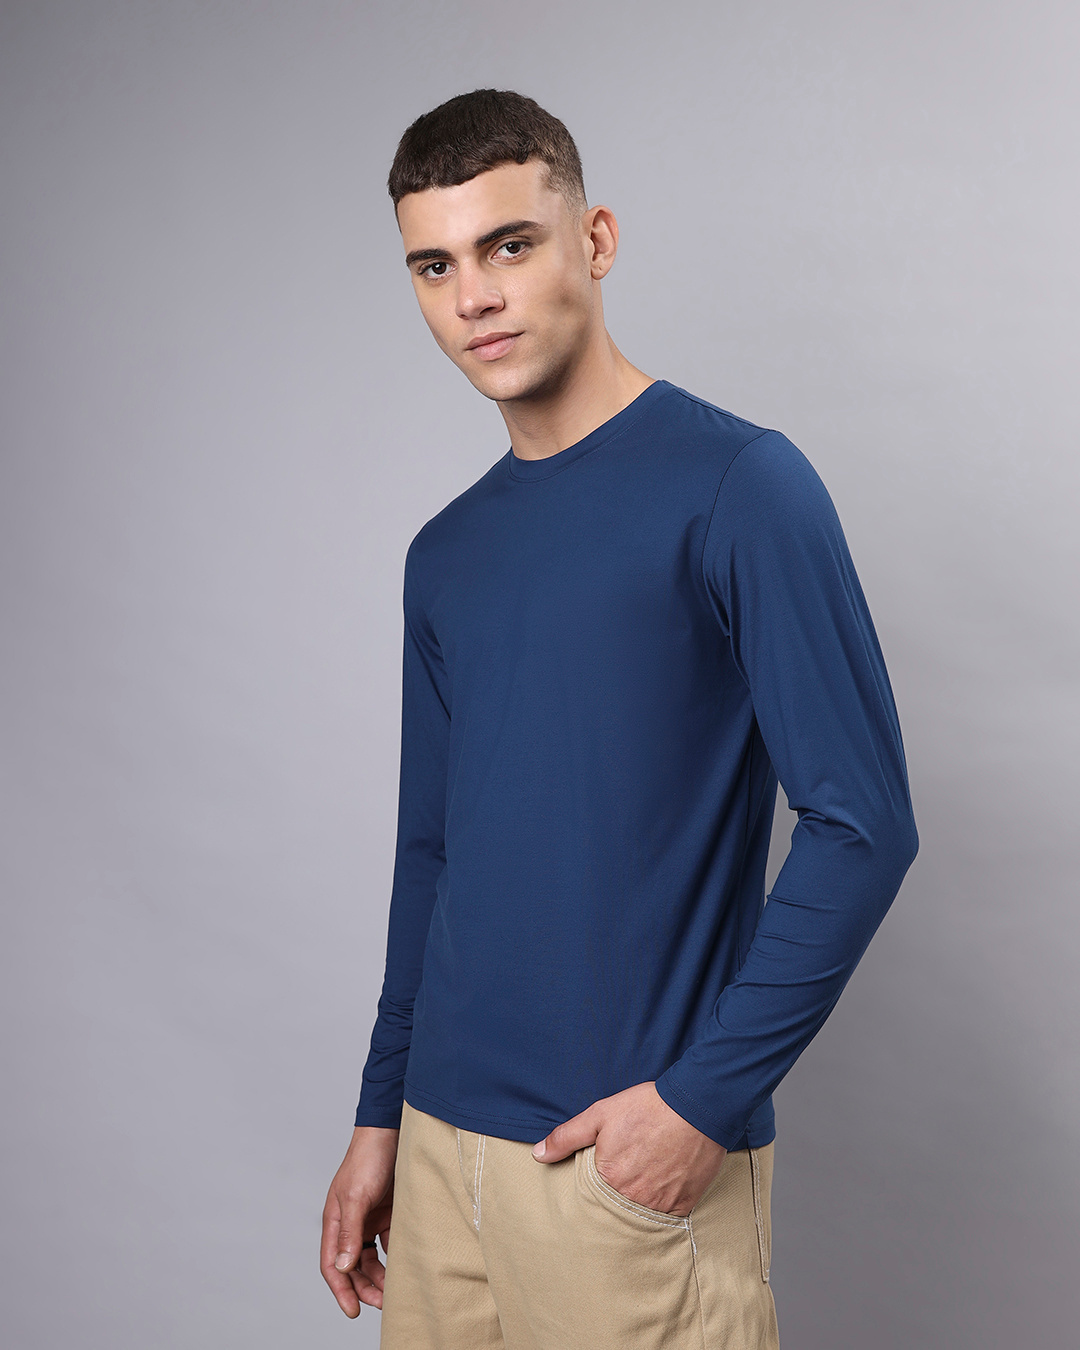 Buy Men's Blue T-shirt Online at Bewakoof